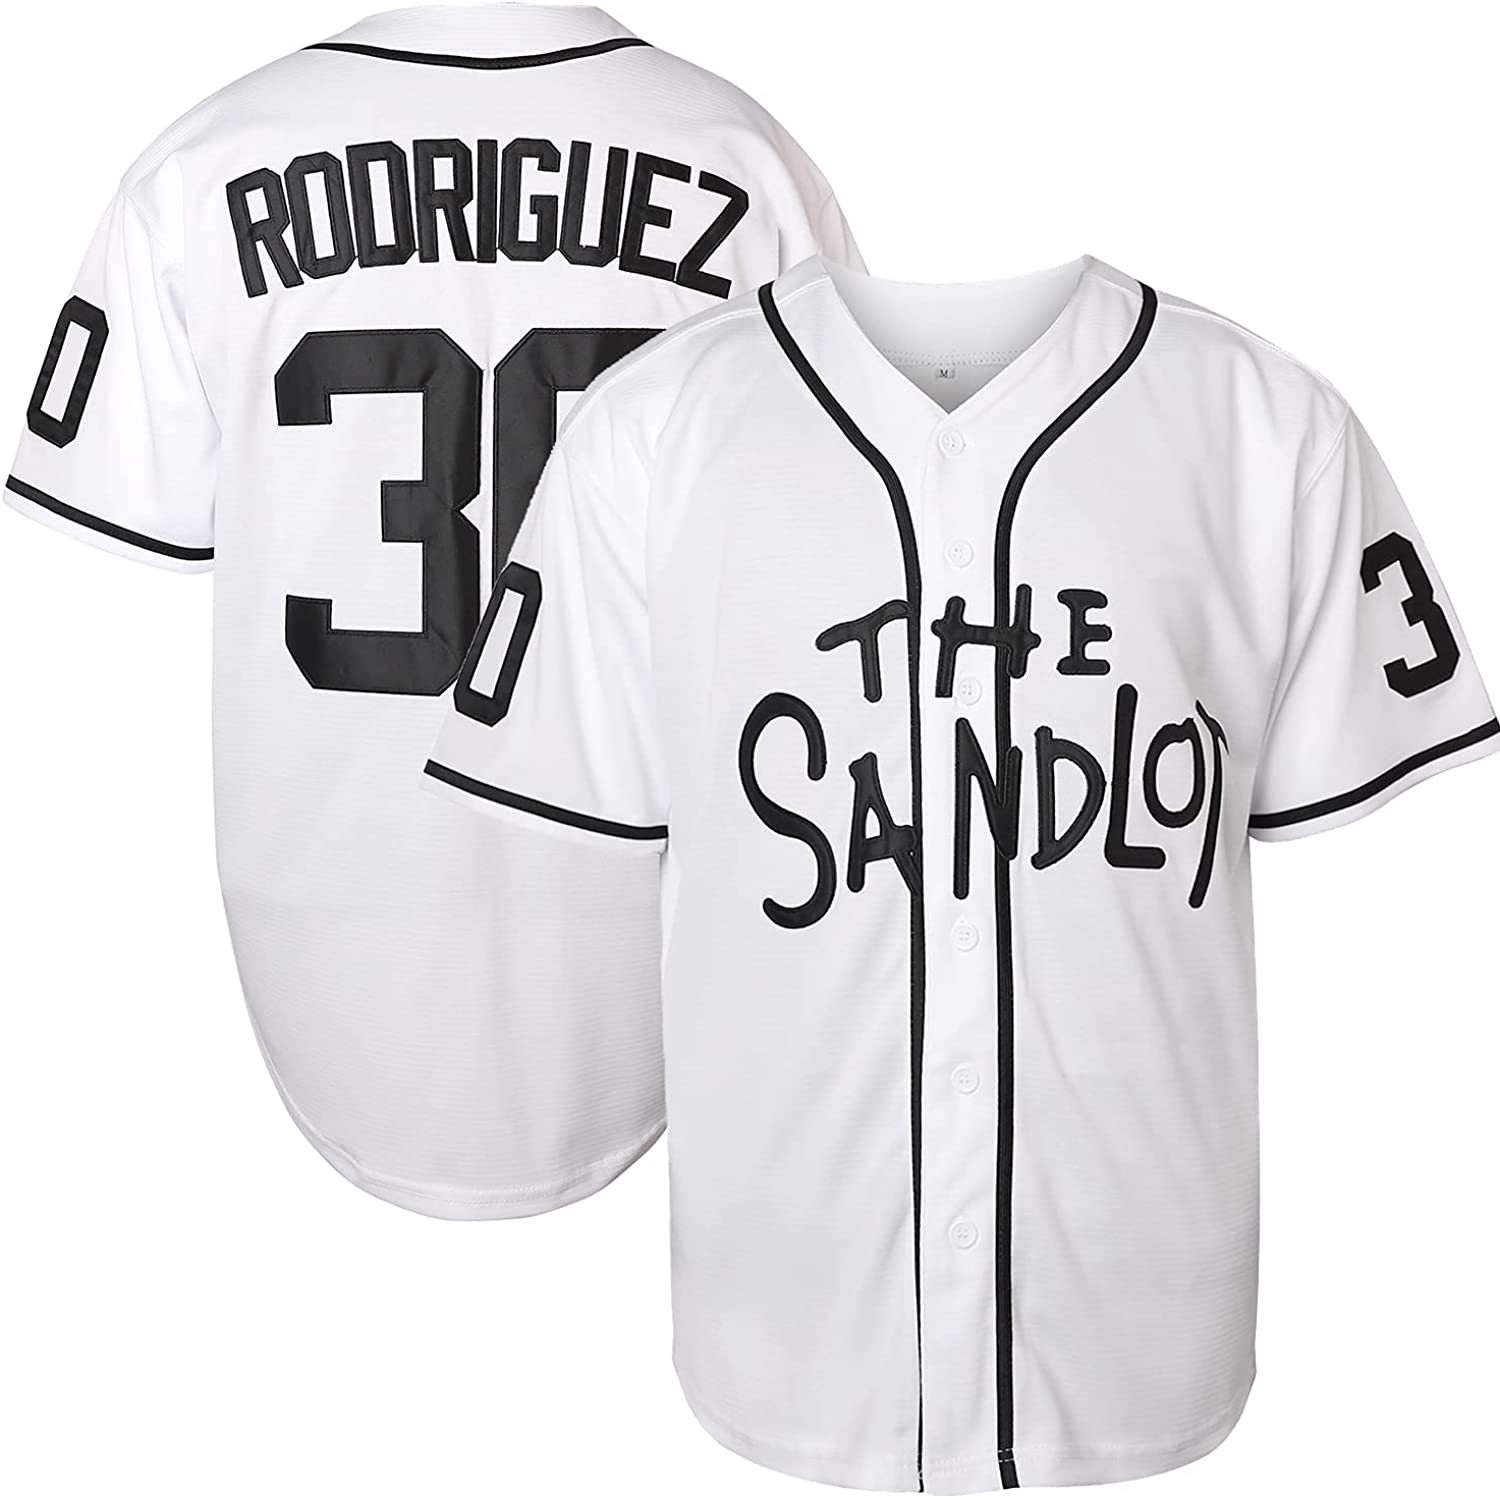 Benny 'The Jet' Rodriguez #30 The Sandlot Movie Baseball Jersey New White